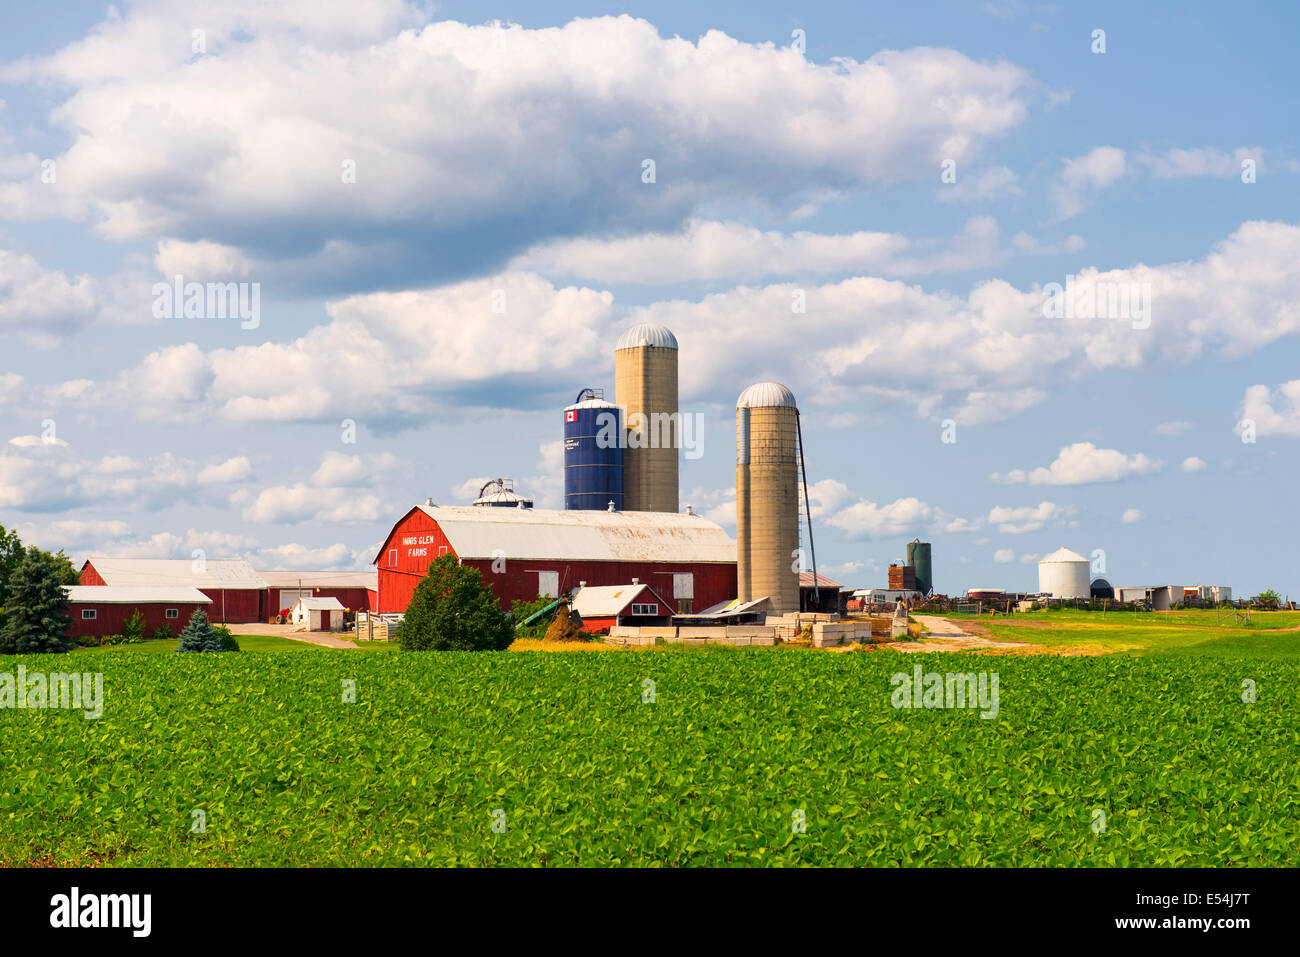 Canada Ontario Farm, fermes, granges, silos Banque D'Images